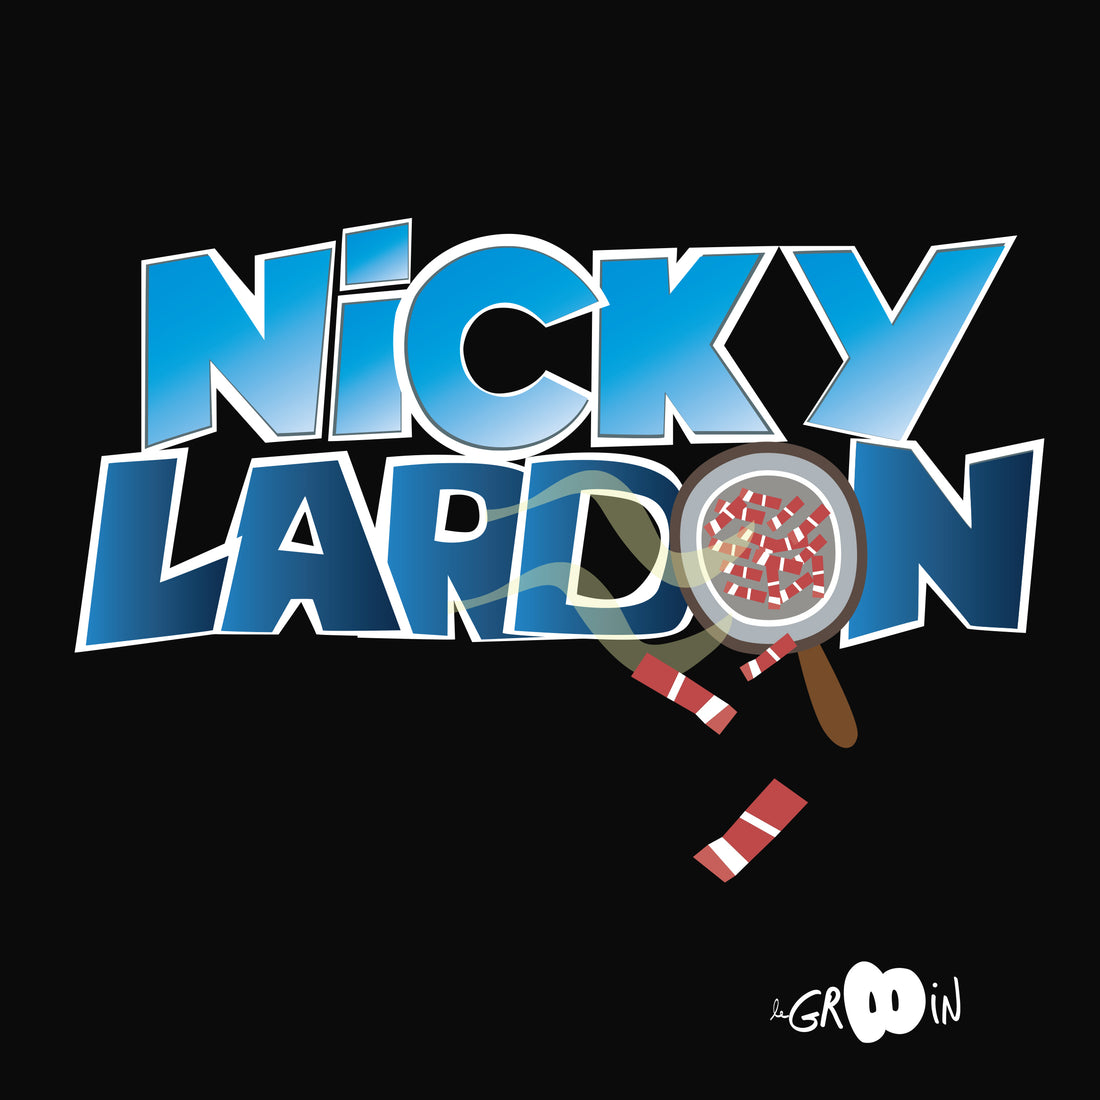 Nicky Lardon ne craint personne